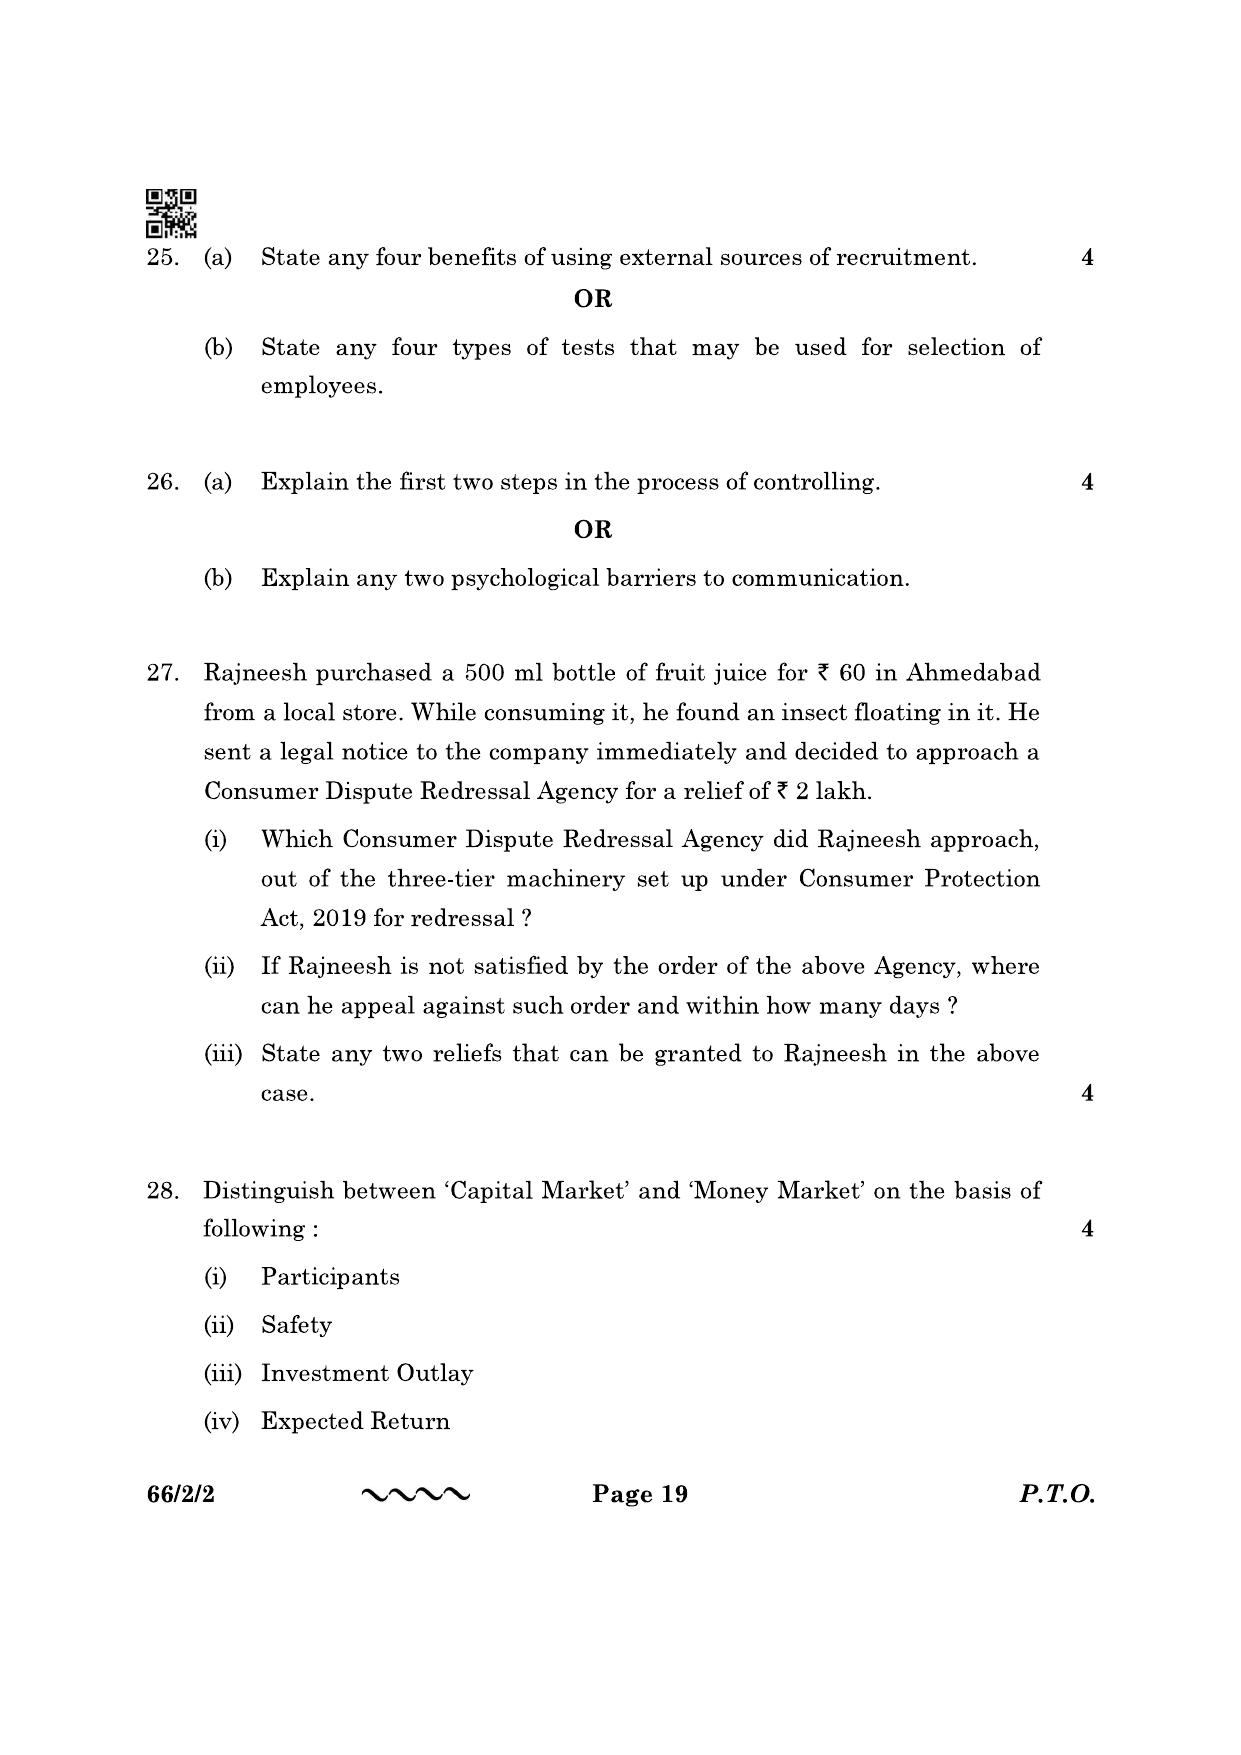 CBSE Class 12 66-2-2 Business Studies 2023 Question Paper - Page 19